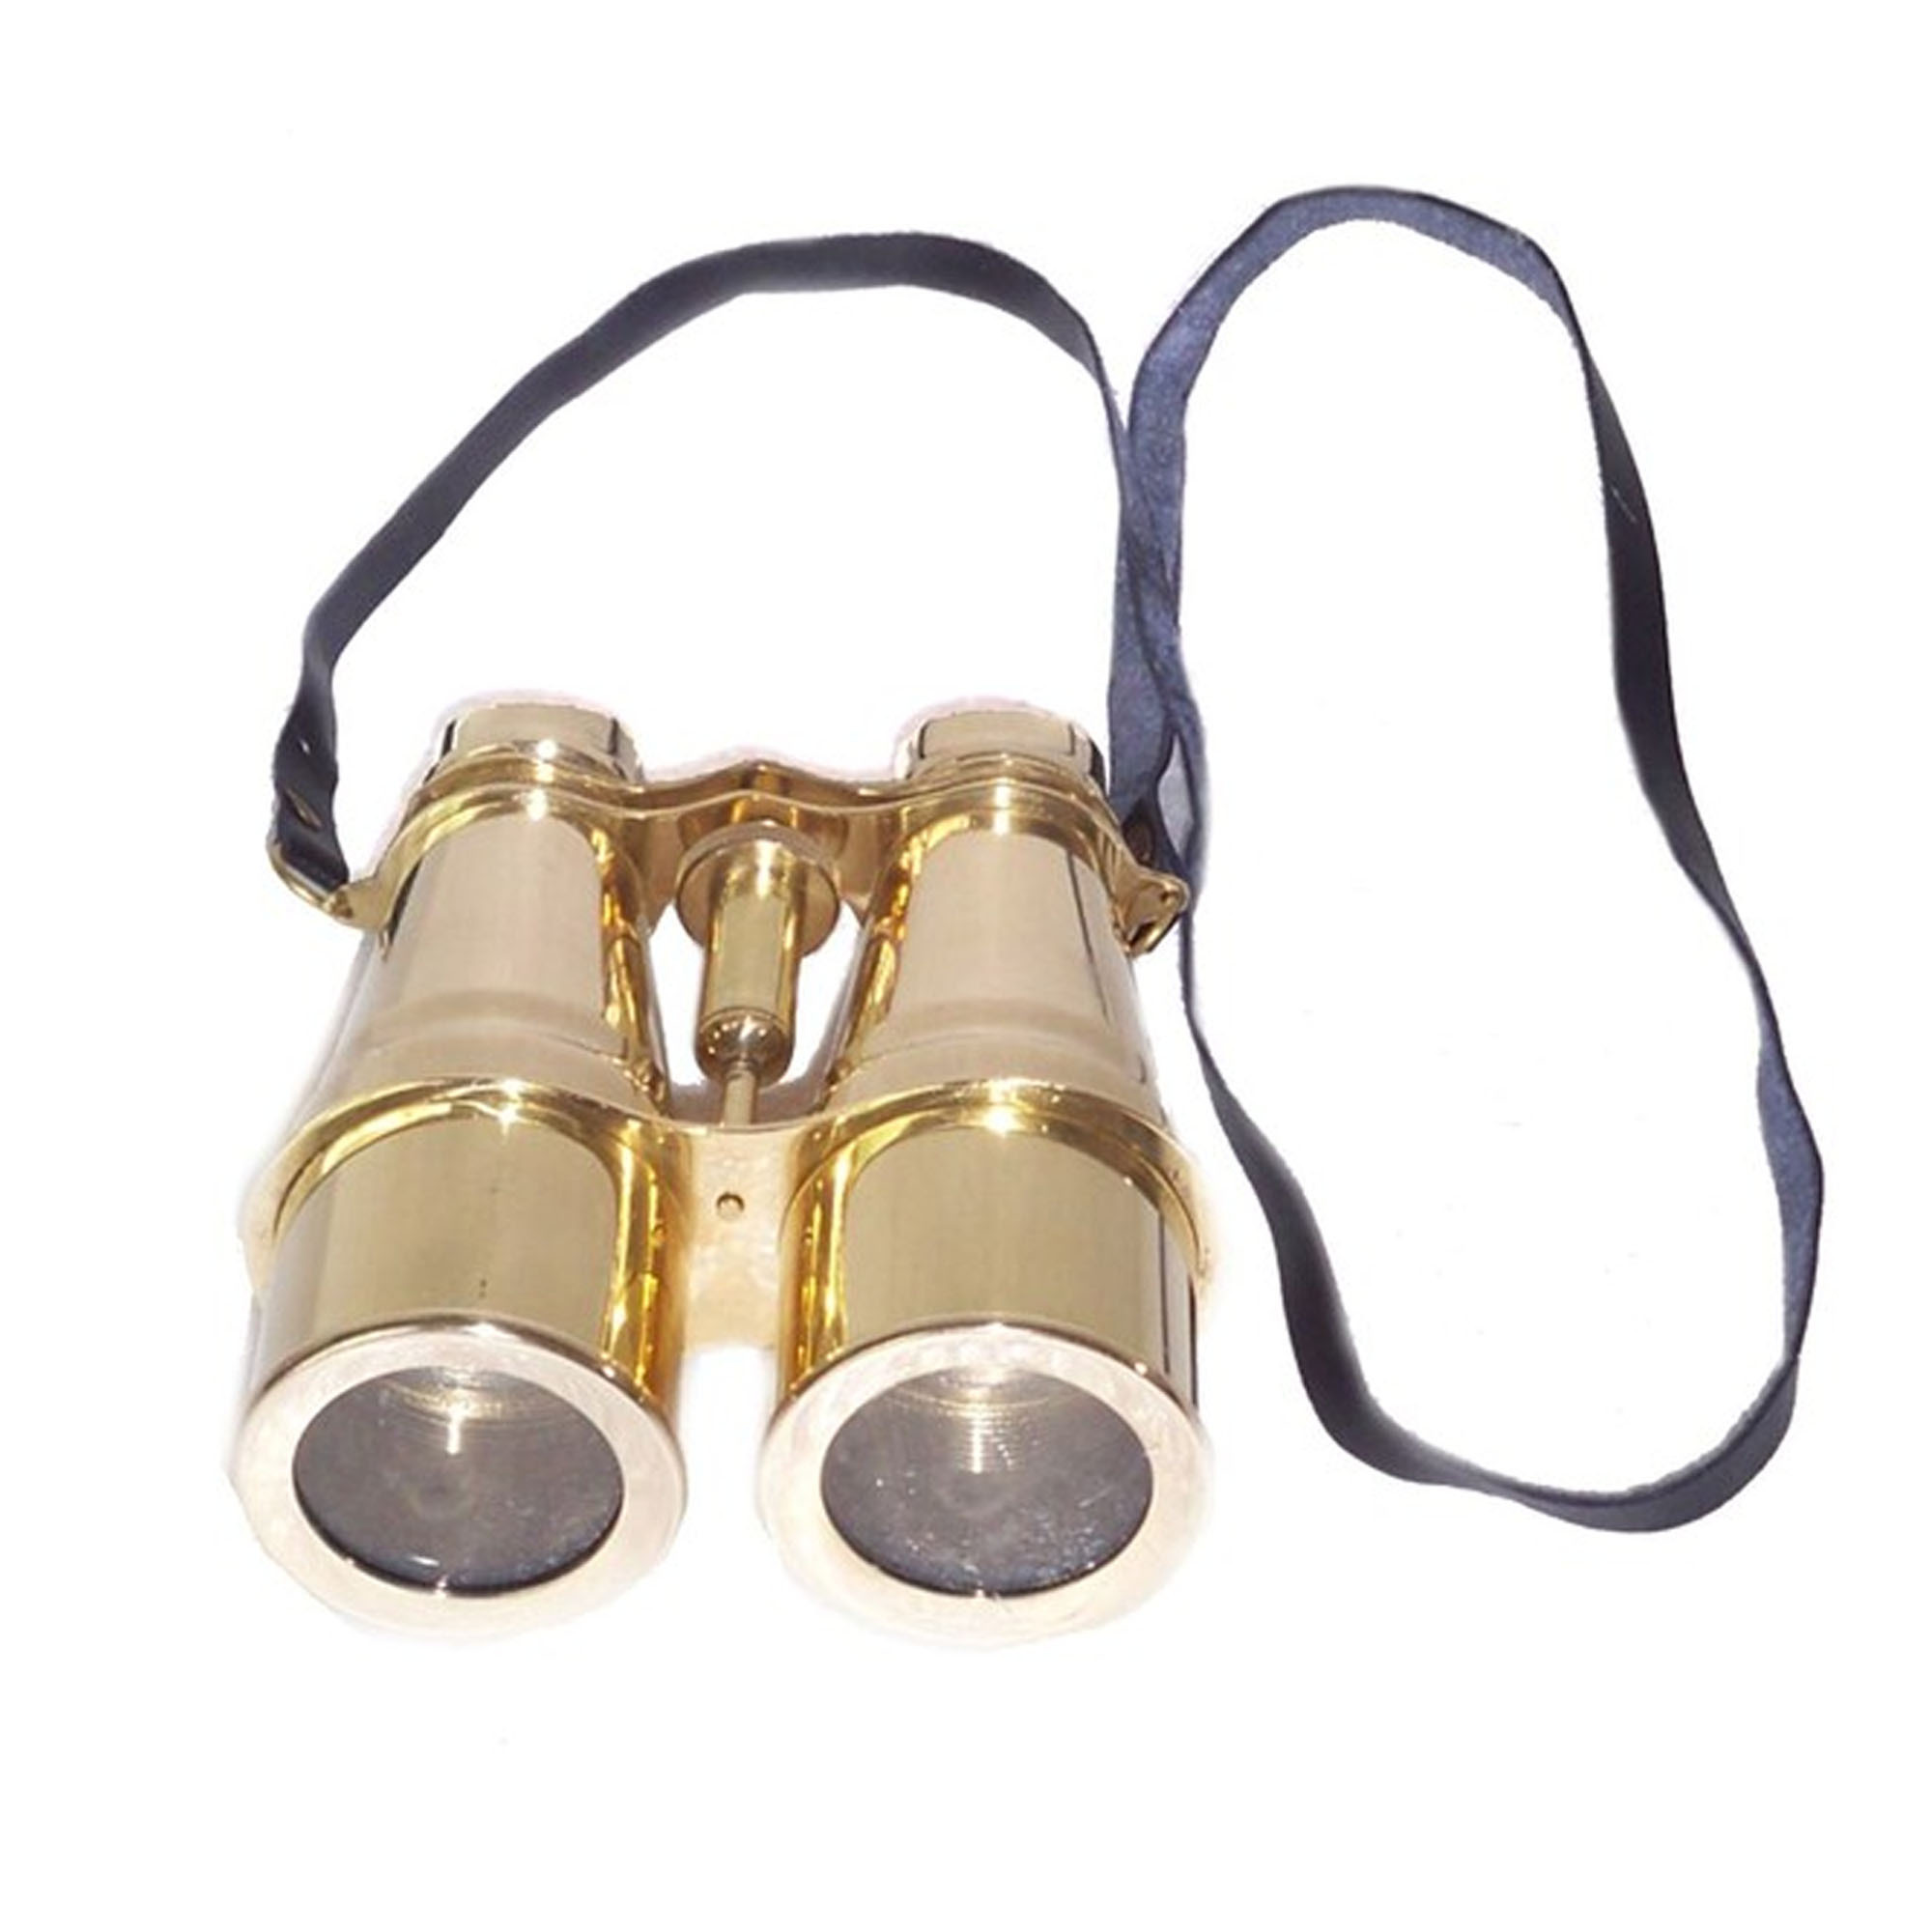 Brass Binoculars with Strap Shiny Brass Binocular Marina Military Navy Vintage Telescope Decorative